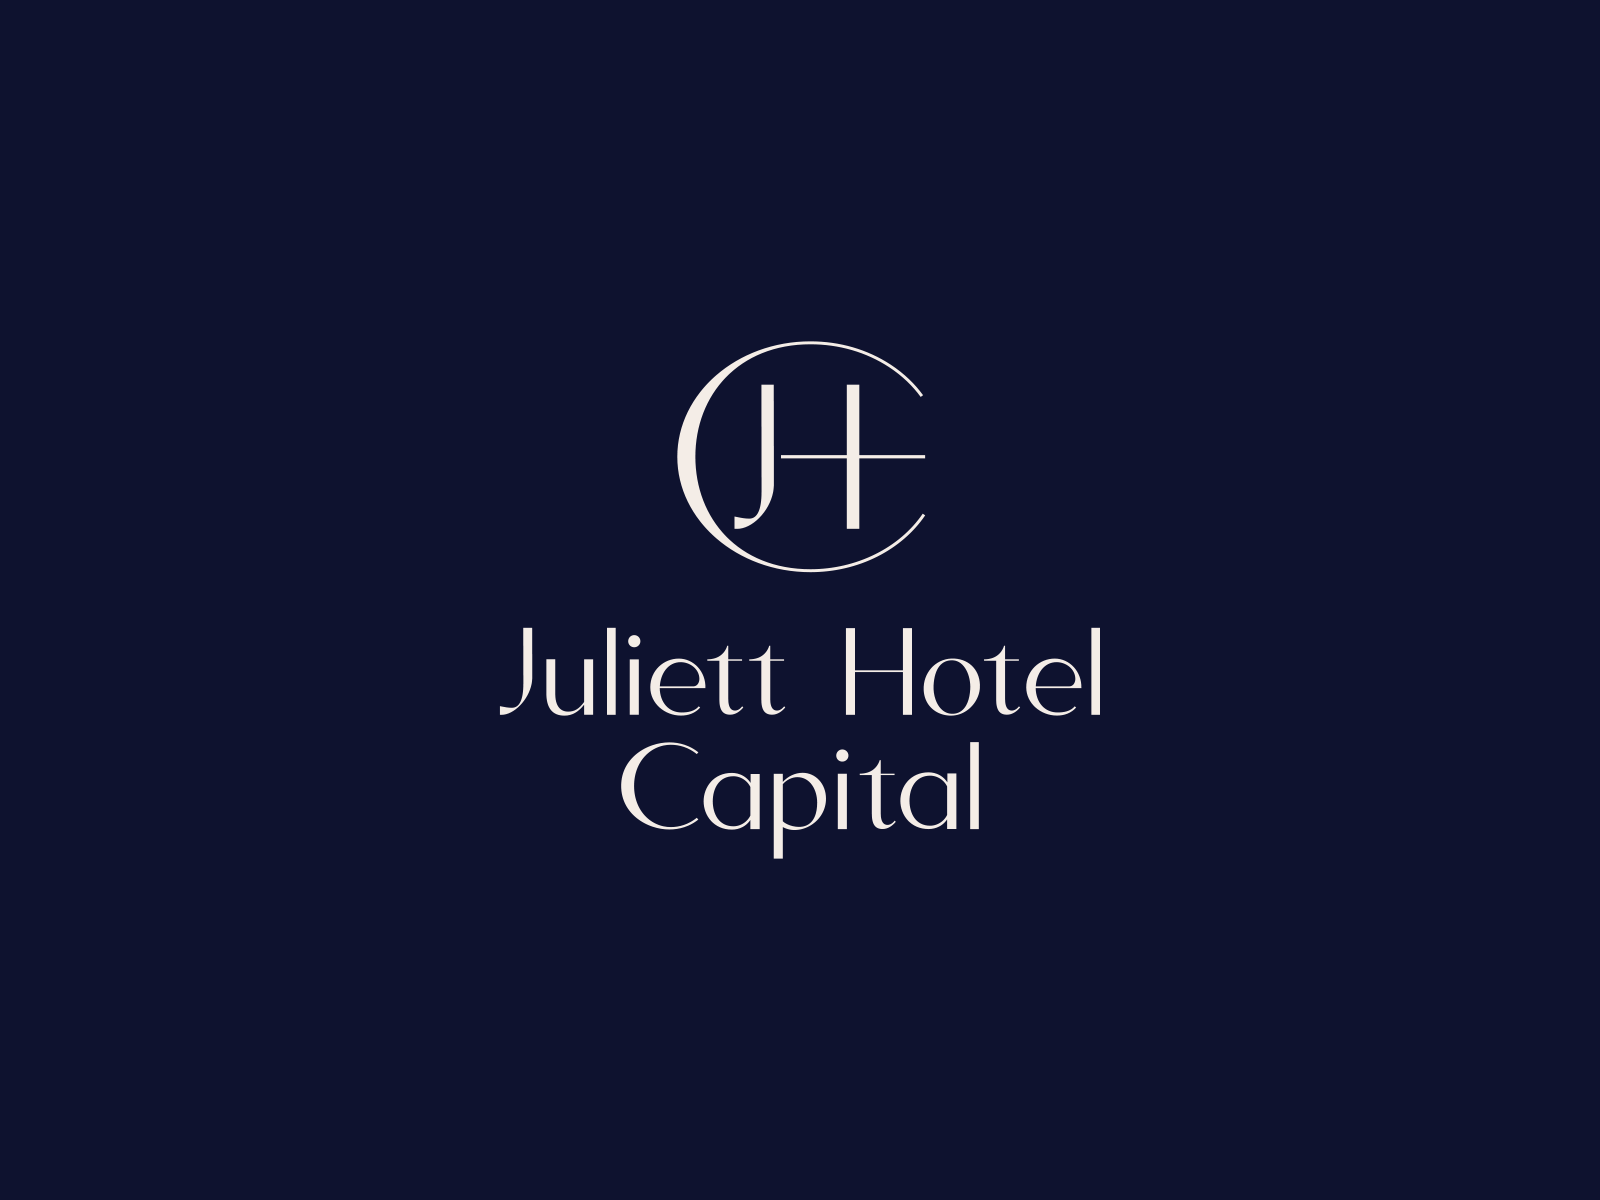 Juliett Hotel Capital Logotype / Symbol Mark Branding